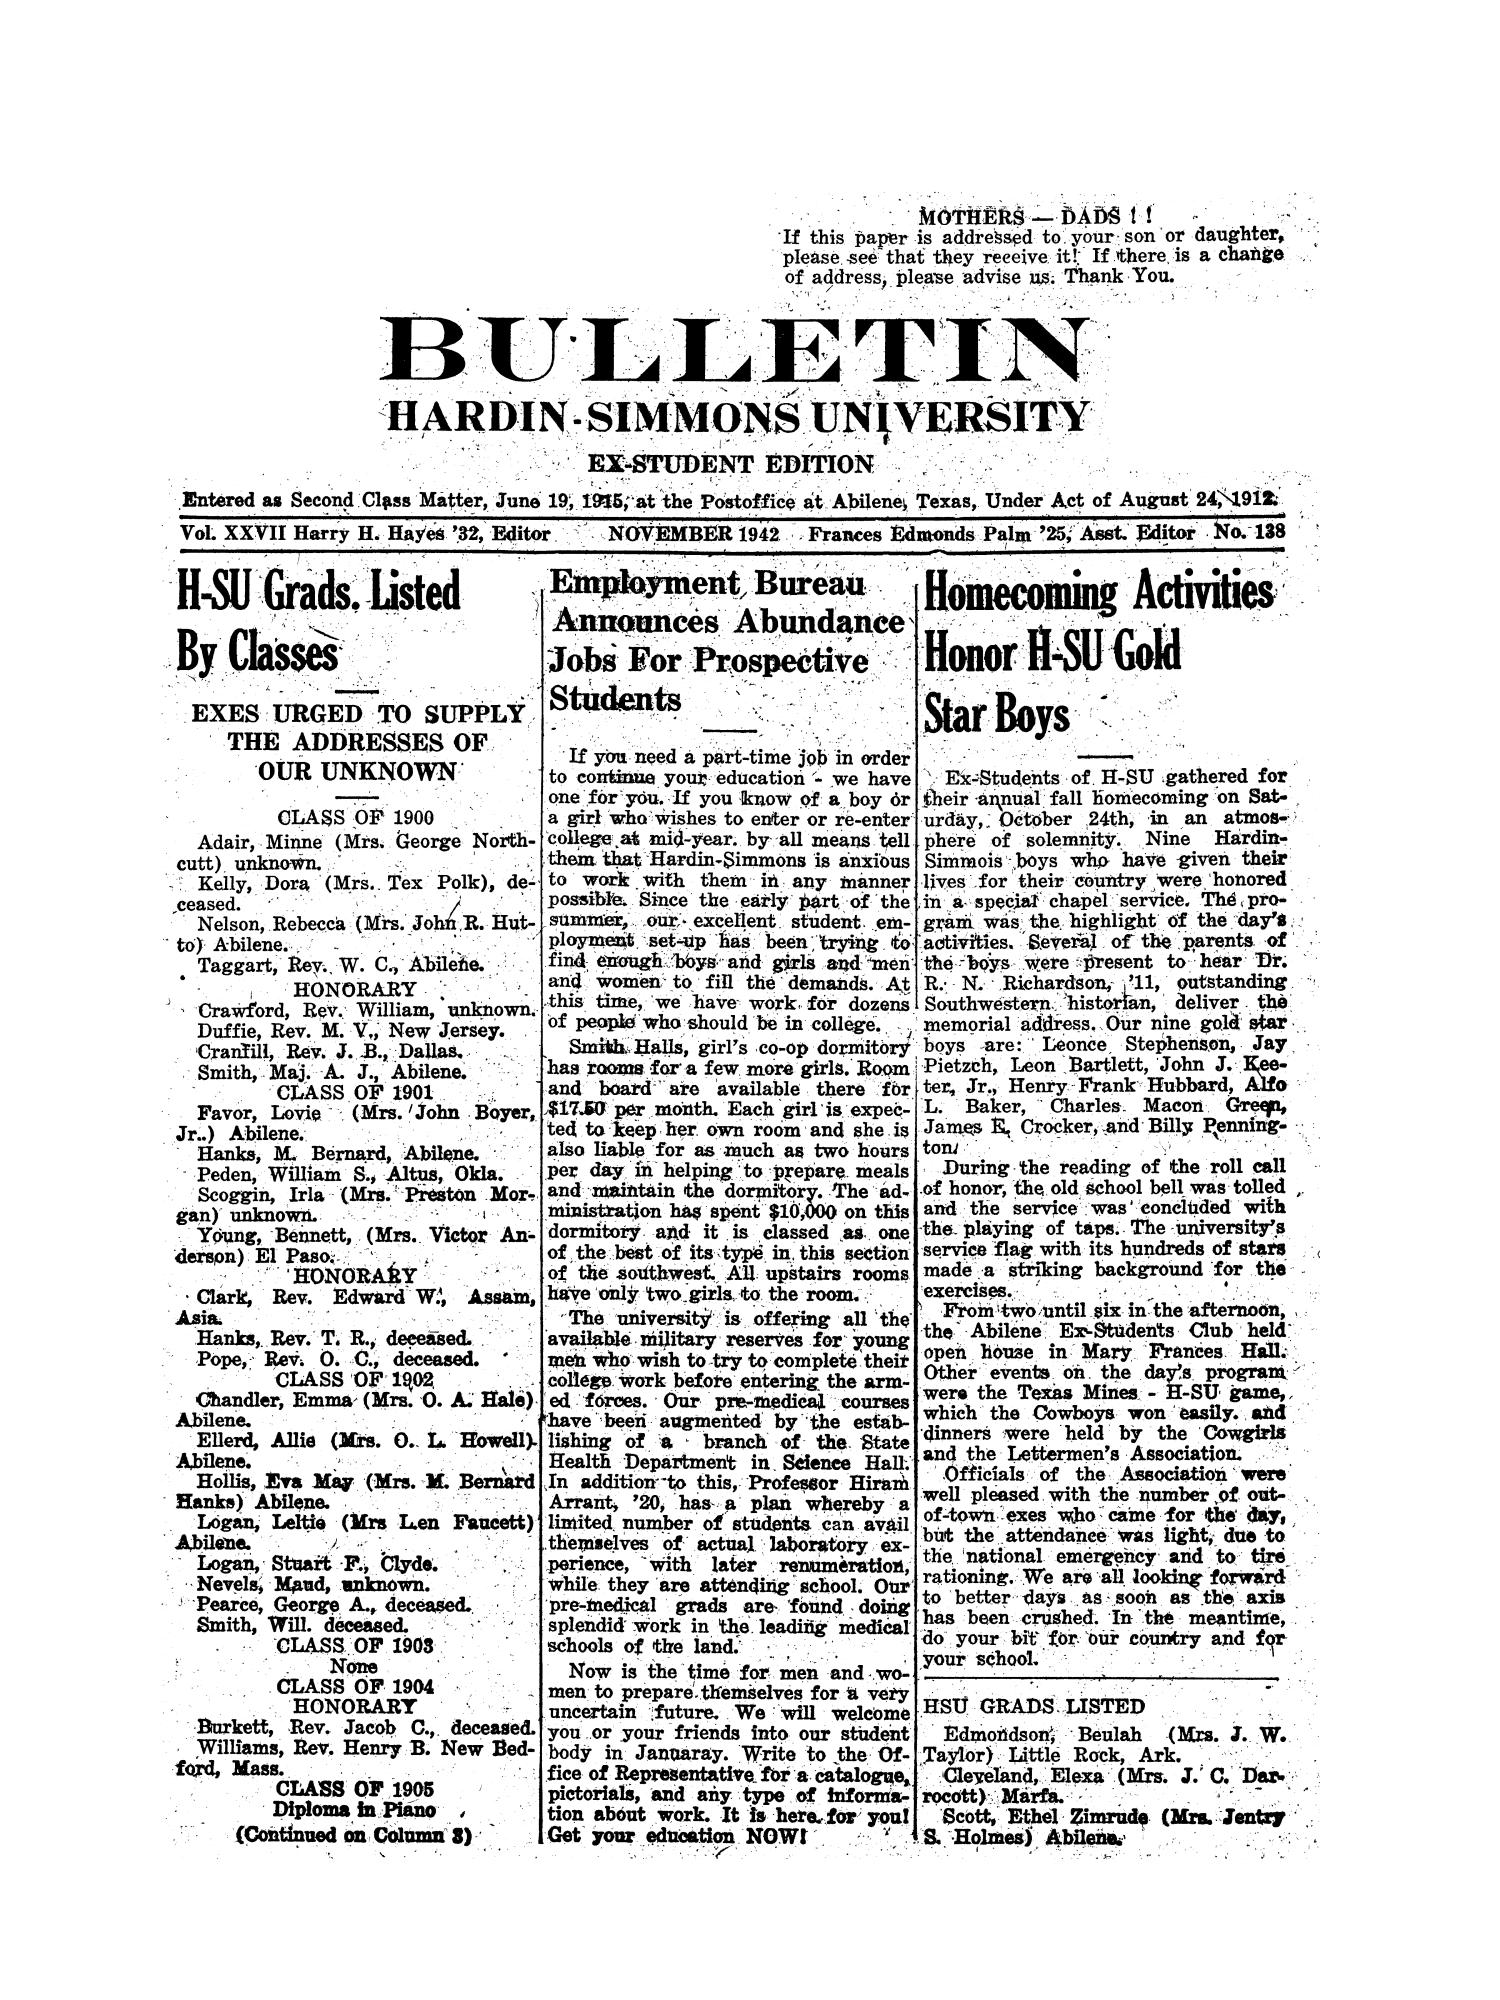 Bulletin: Hardin-Simmons University, Ex-Student Edition, November 1942
                                                
                                                    1
                                                